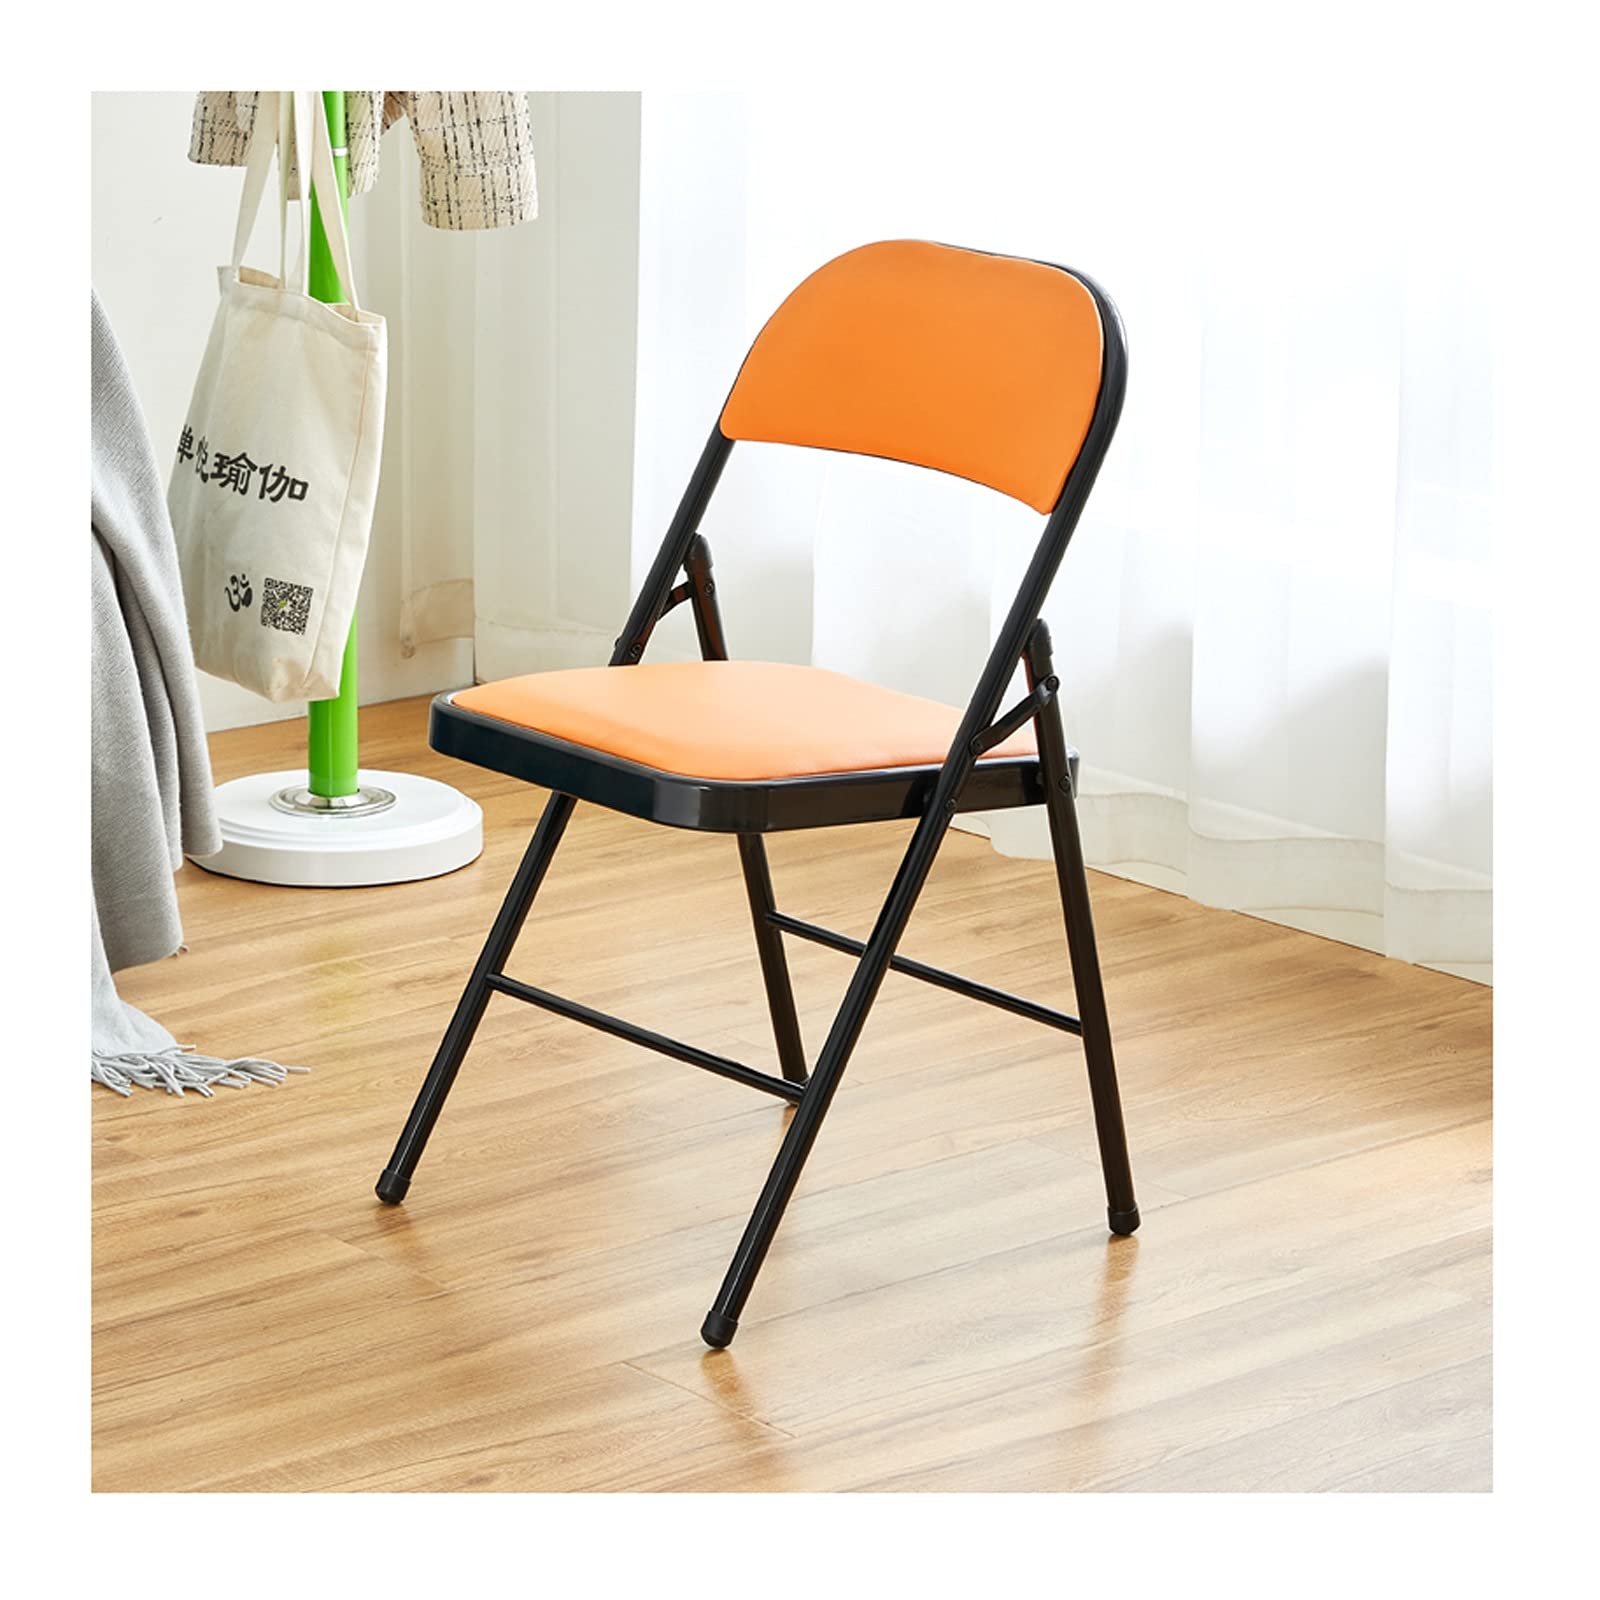 Popular Wholesale Cheap Price PVC Metal Chrome legs Modern Dining chair